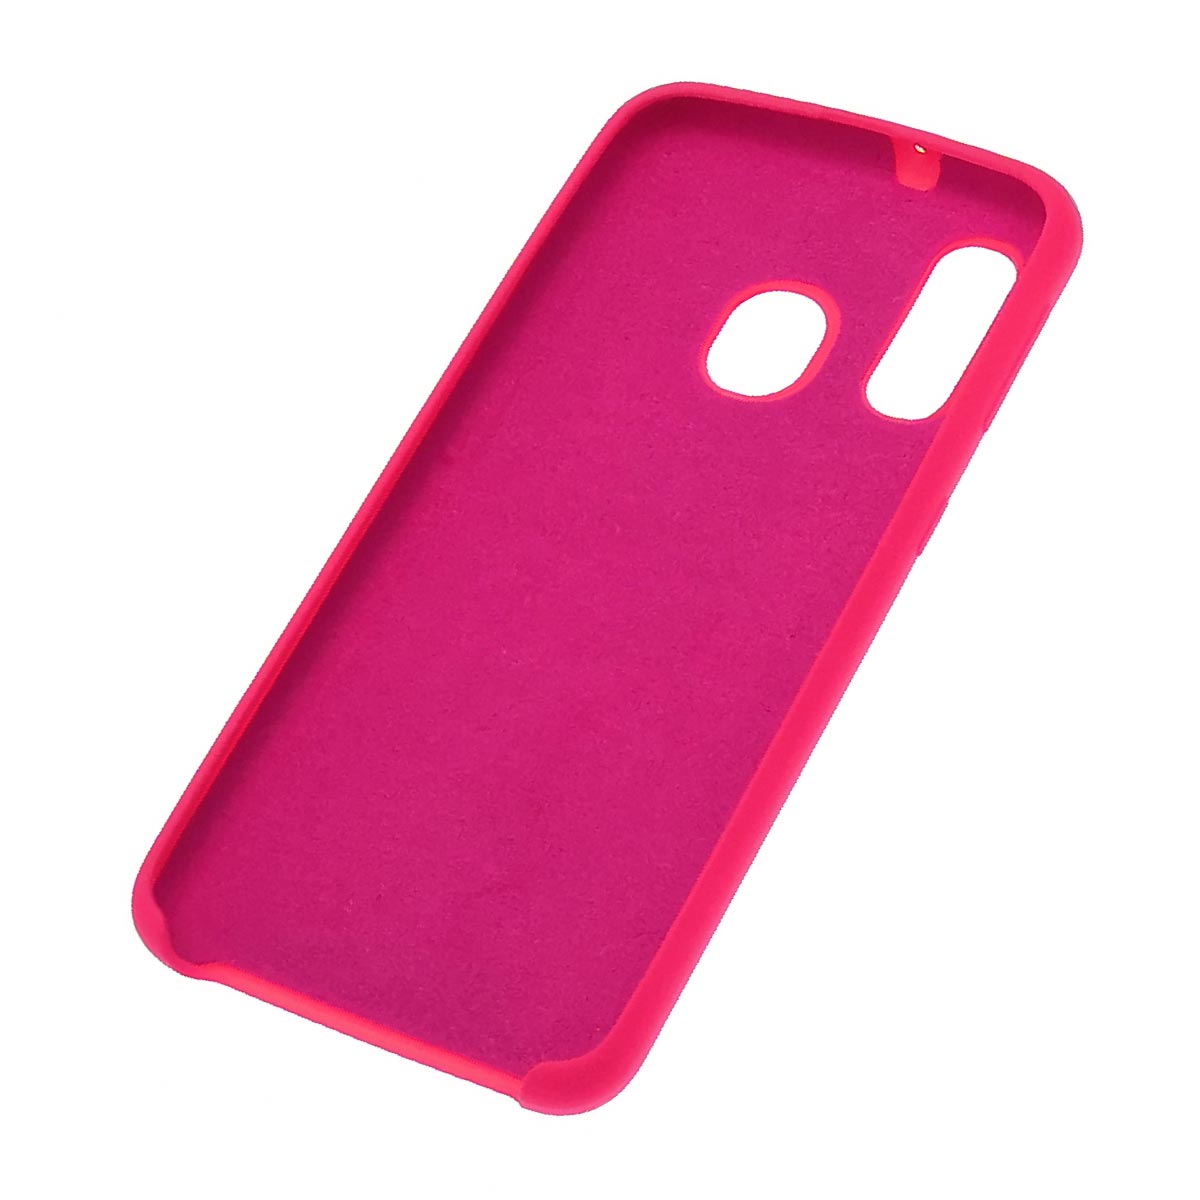 Чехол накладка Silicon Cover для SAMSUNG Galaxy A40 (SM-A405), силикон, бархат, цвет ярко розовый